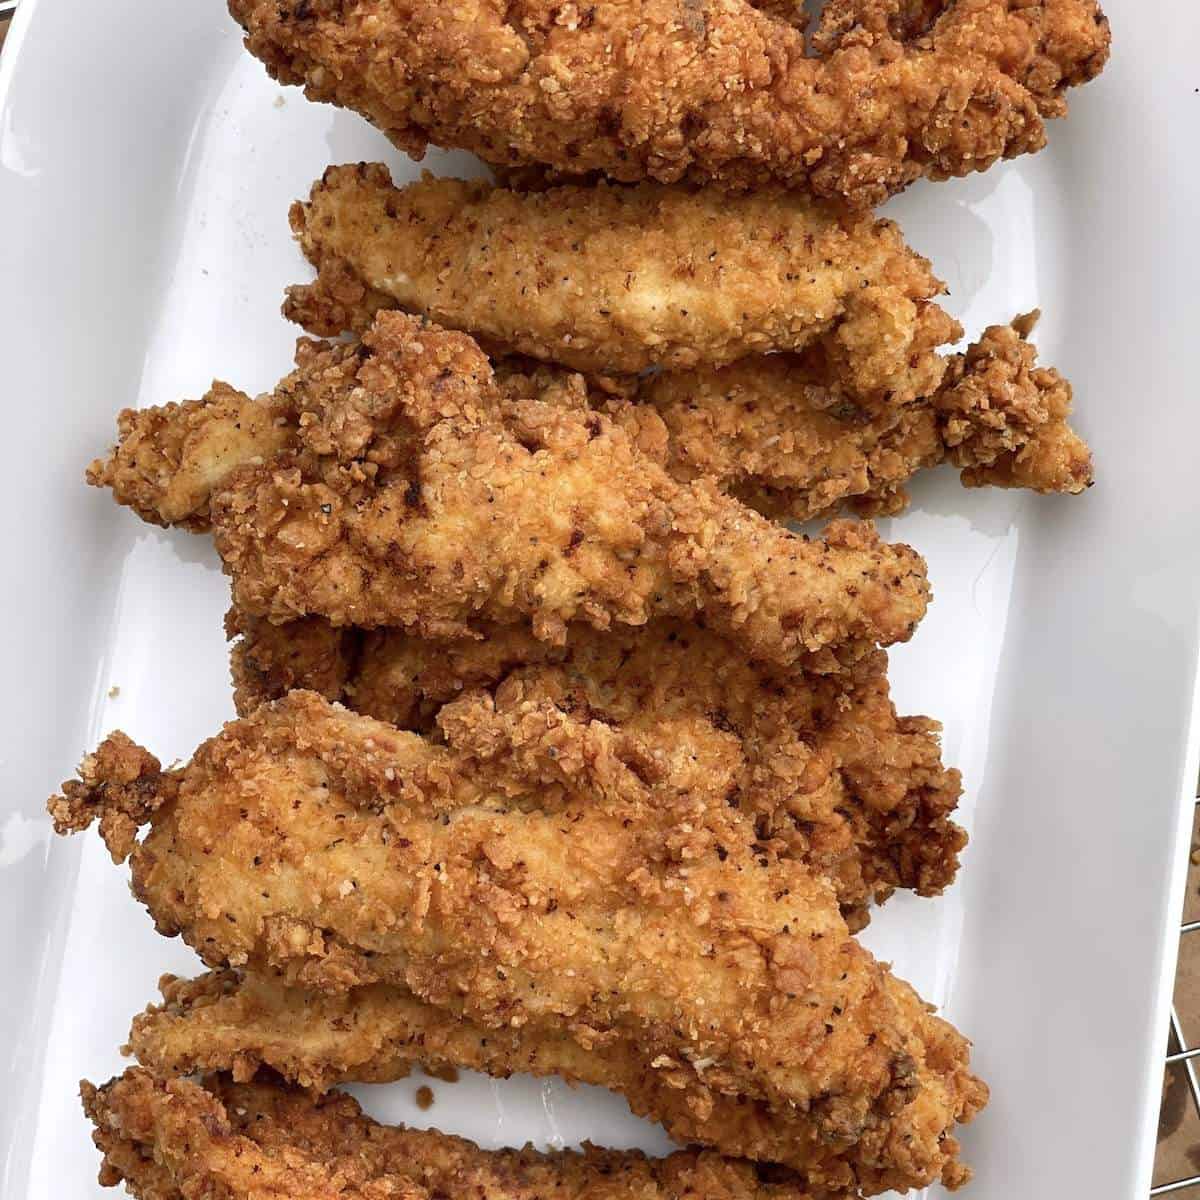 https://southern-bytes.com/wp-content/uploads/2022/05/crispy-buttermilk-fried-chicken-tenders-on-a-platter.jpeg